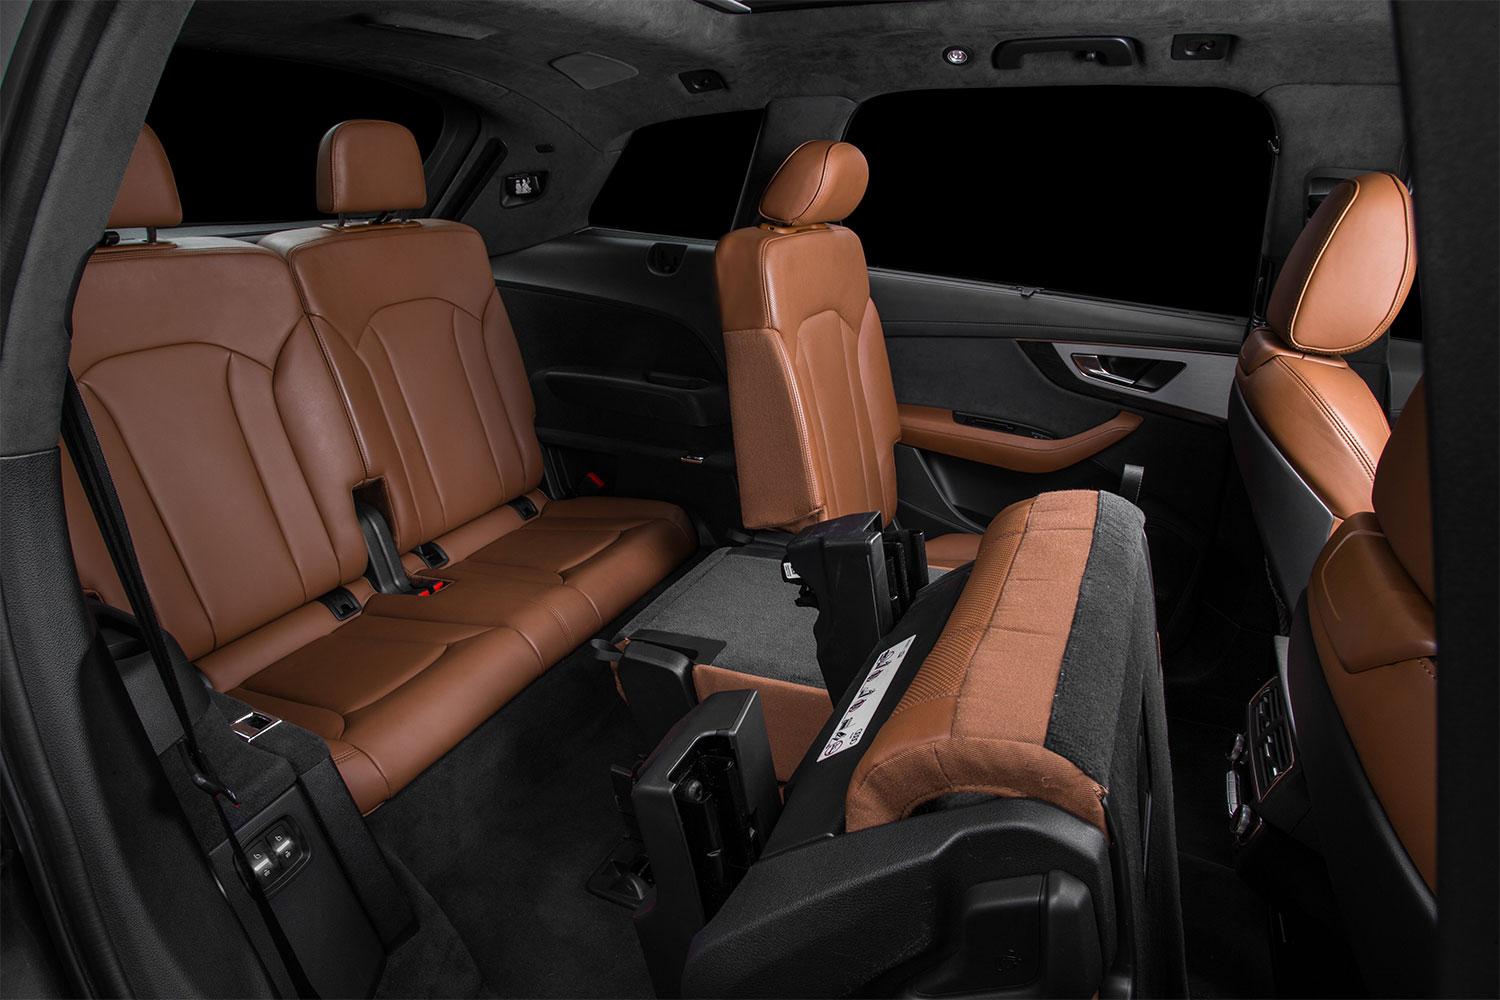 2016 Audi Q7 interior back folded